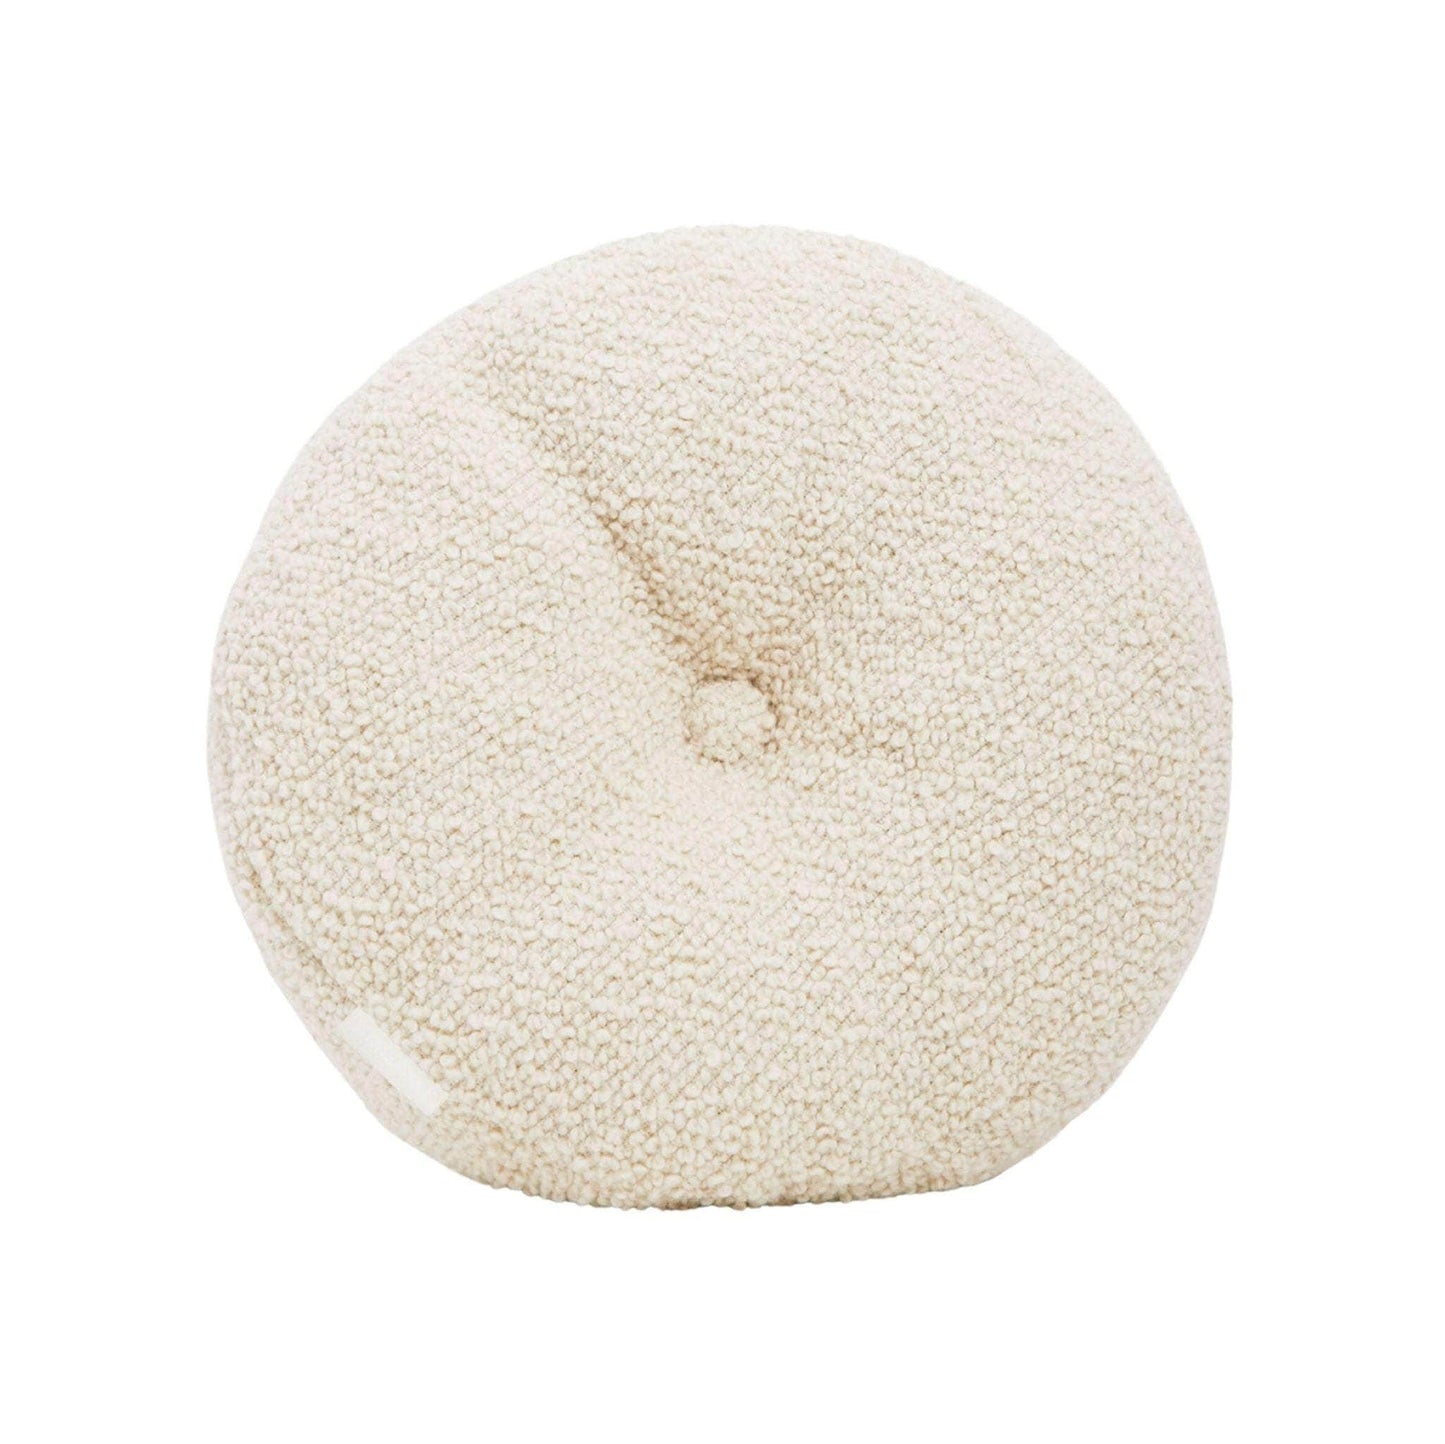 Le Rond - Wool Bouclé Cushion Egg White